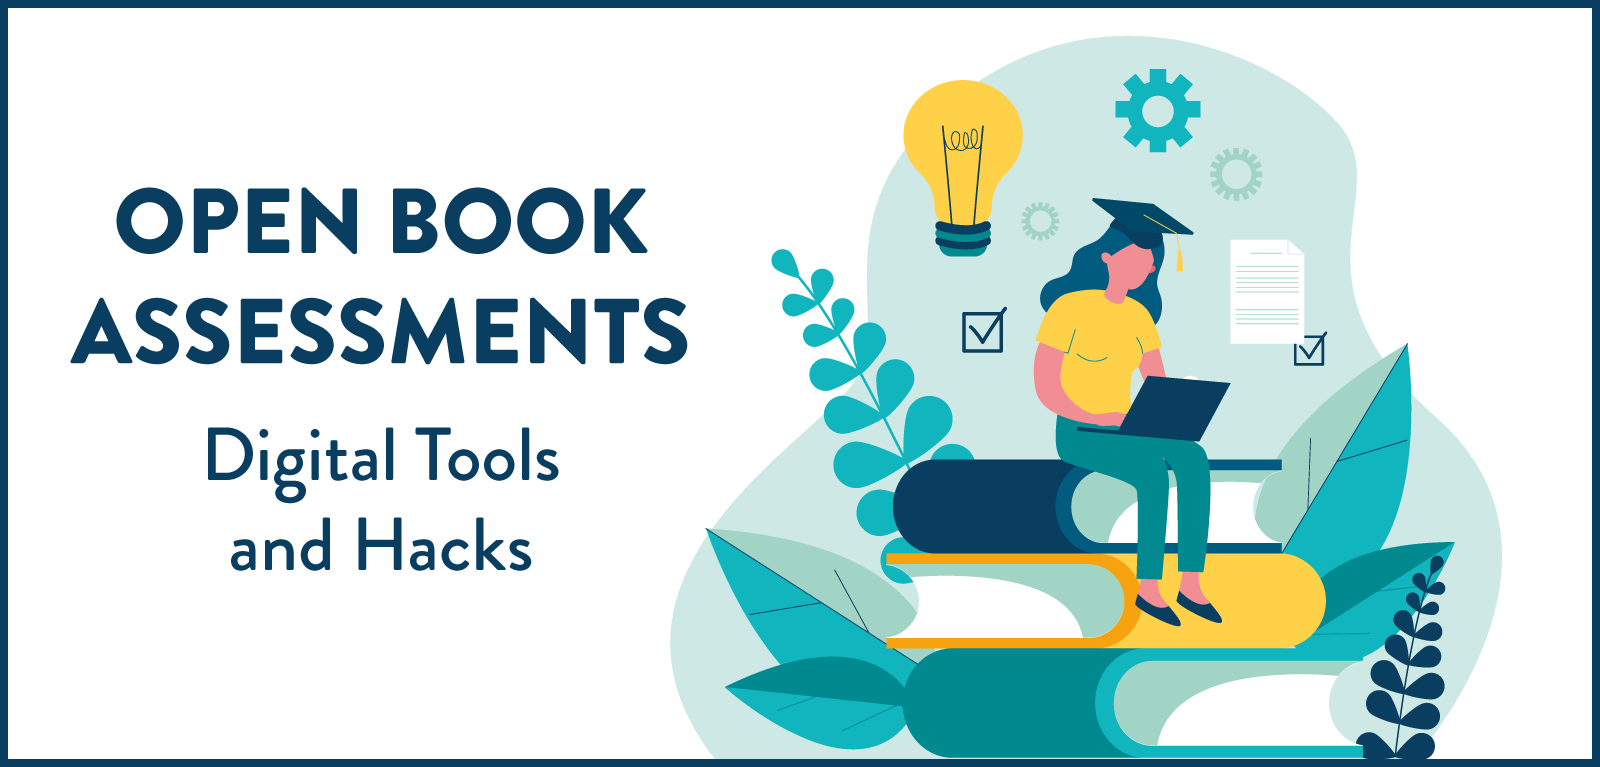 Open Book Assessments. Digital Tools and Hacks